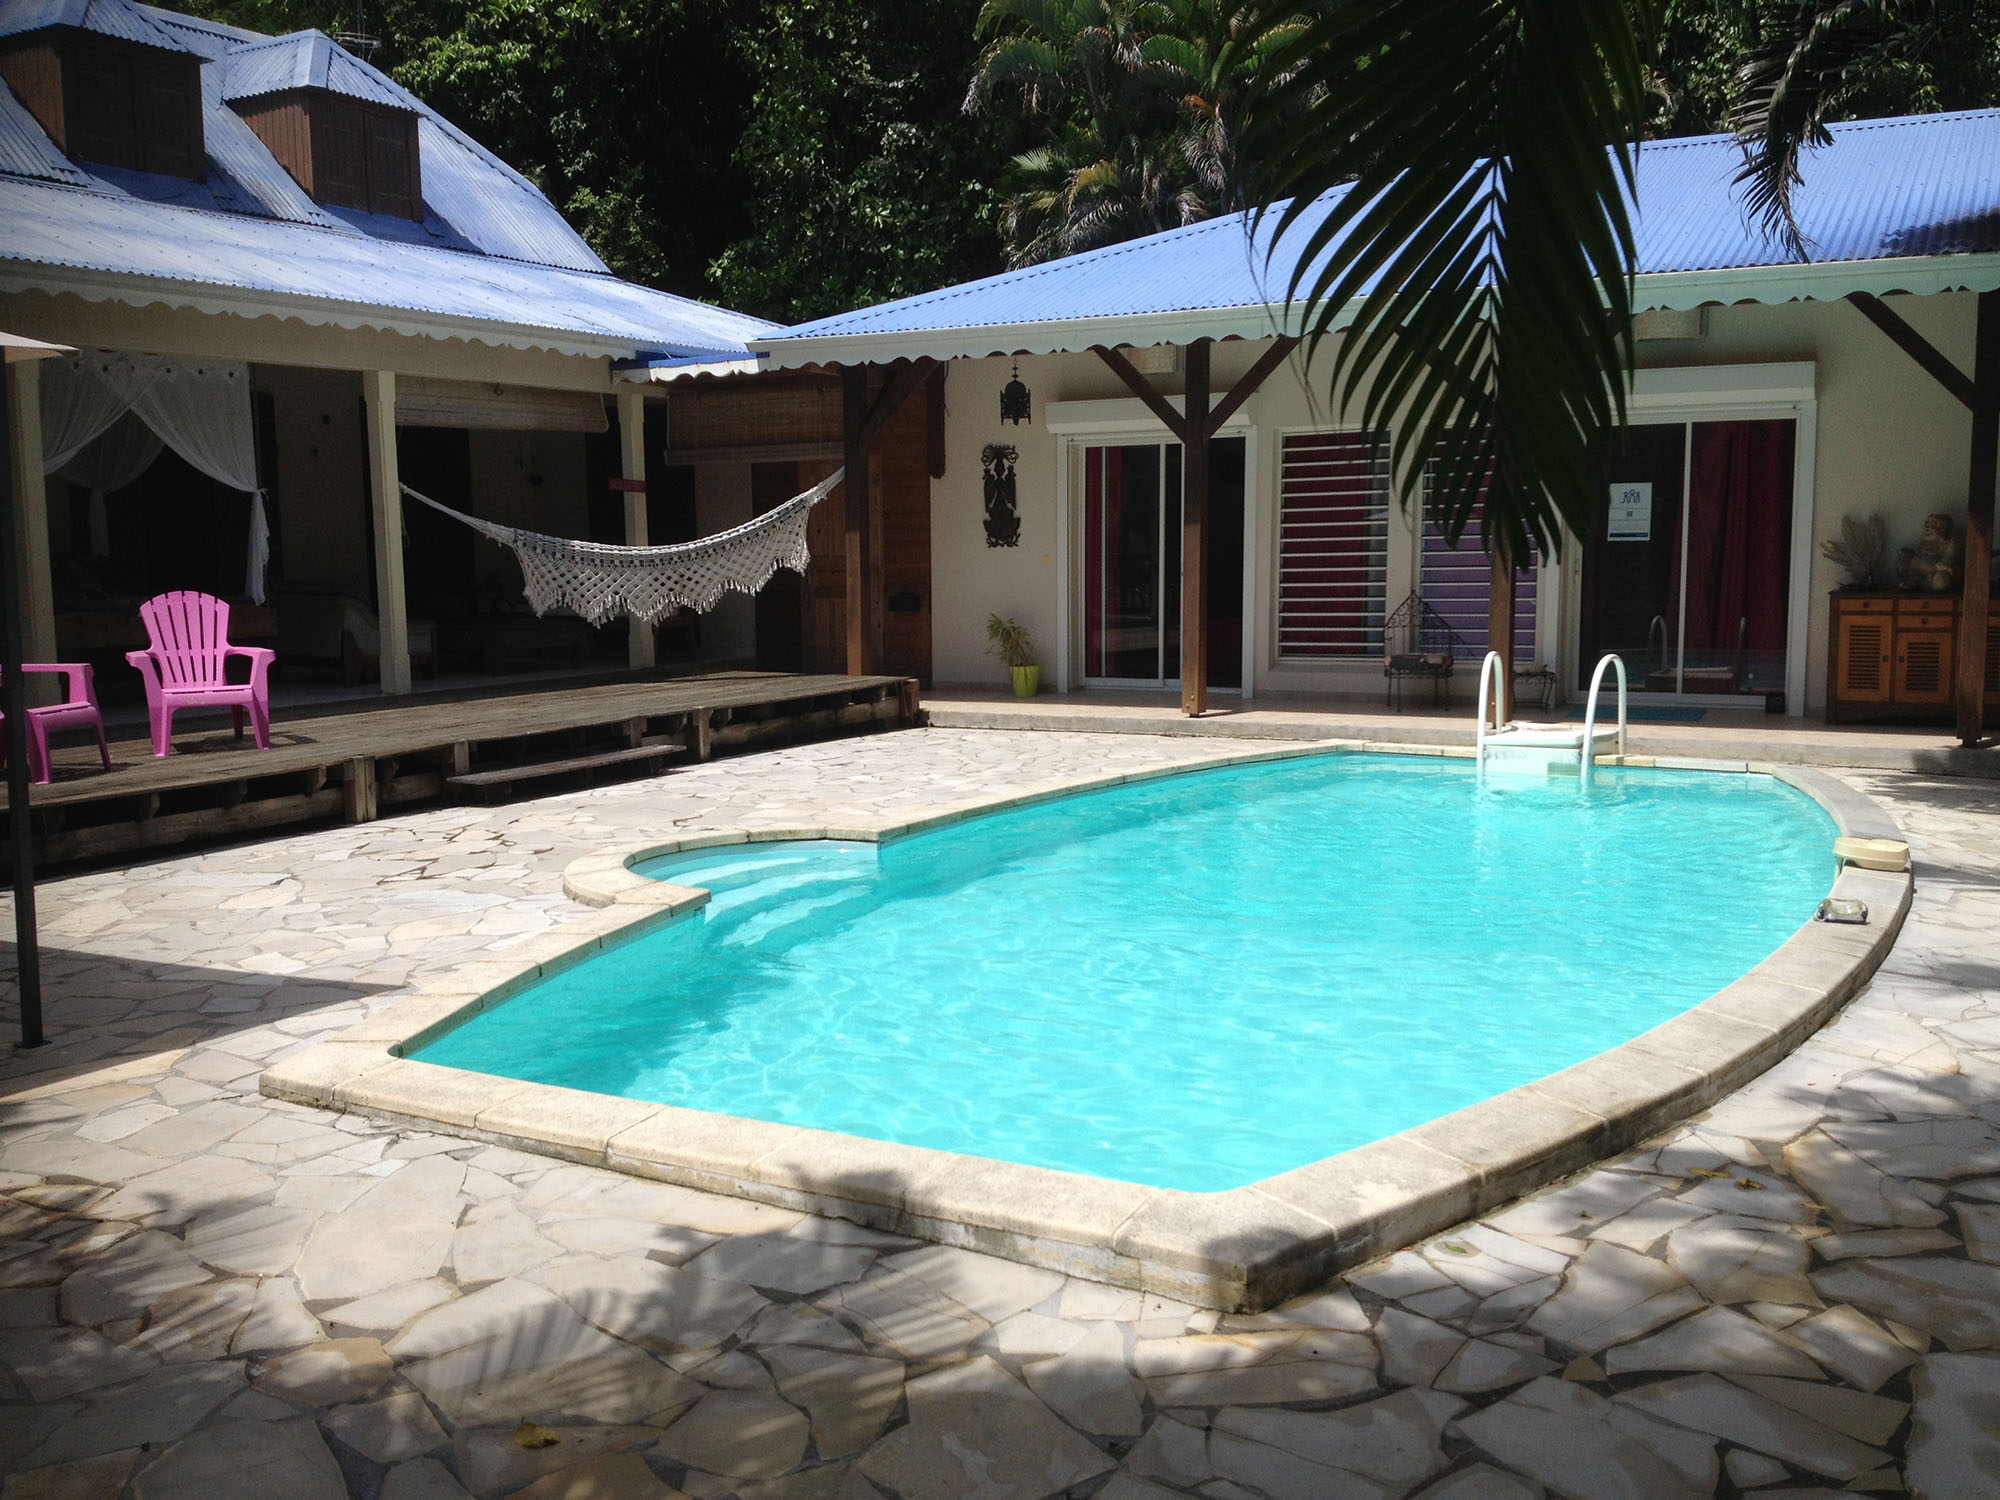 hebergement_location de bungalow avec piscine_image_18